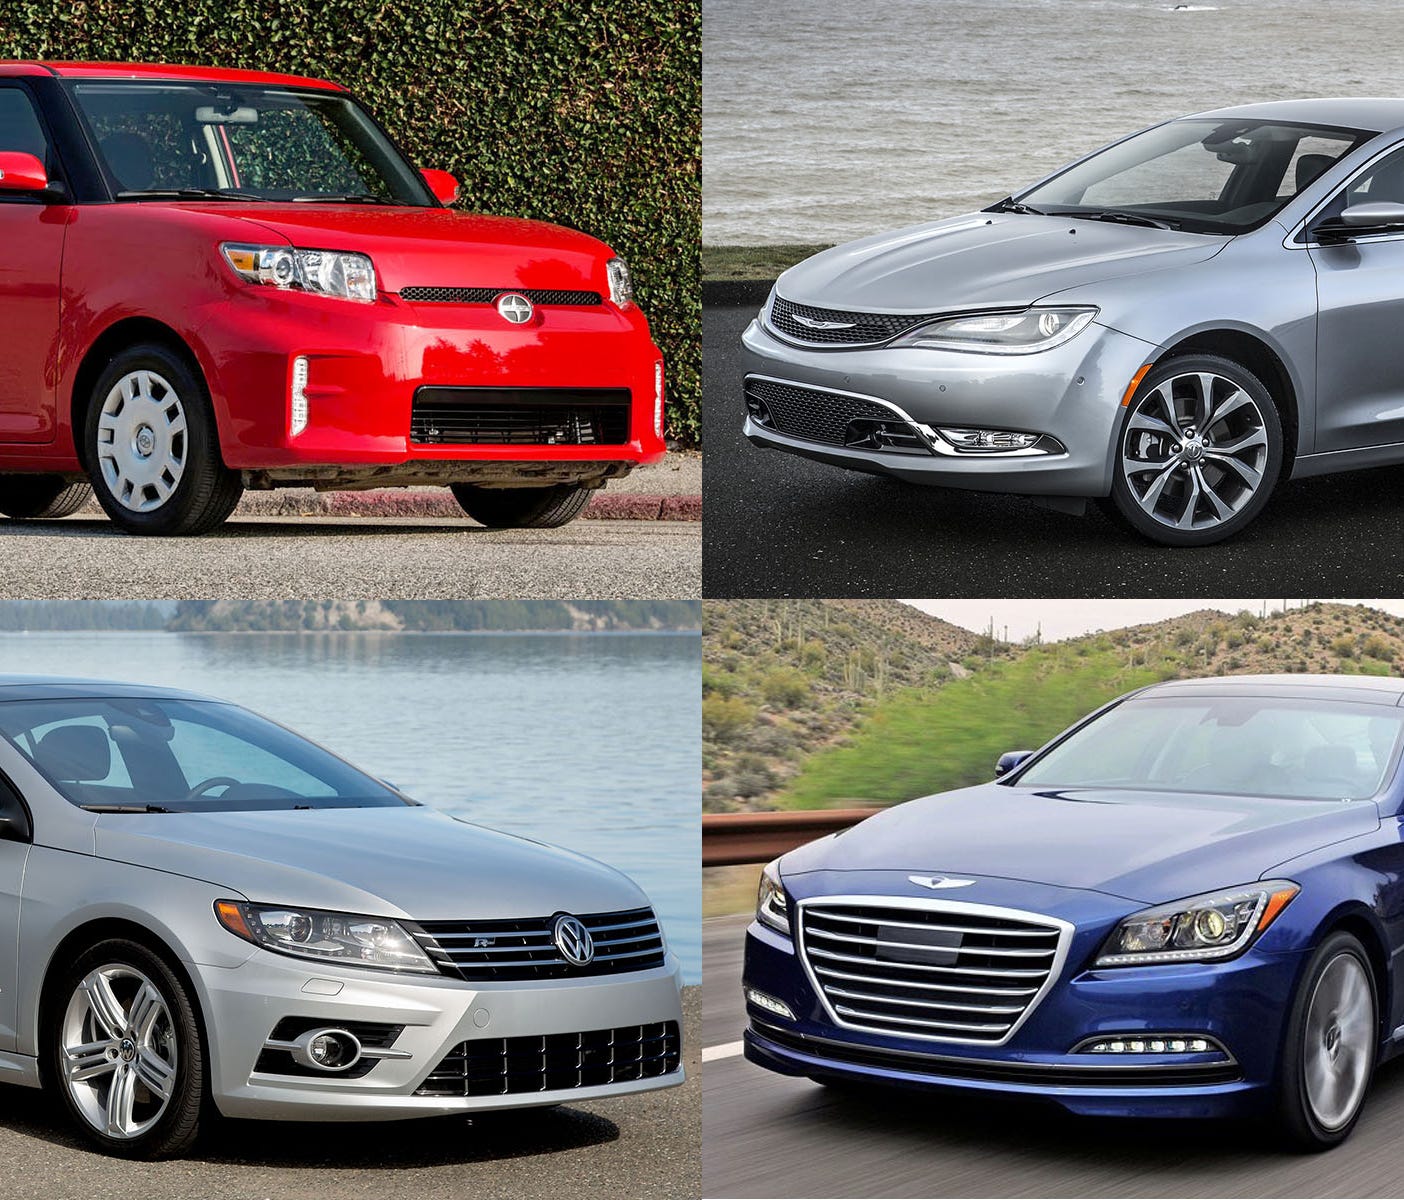 Clockwise from upper left, 2015 Scion xB, 2016 Chrysler 200 C, 2016 Hyundai Genesis and 2017 Volkswagen CC